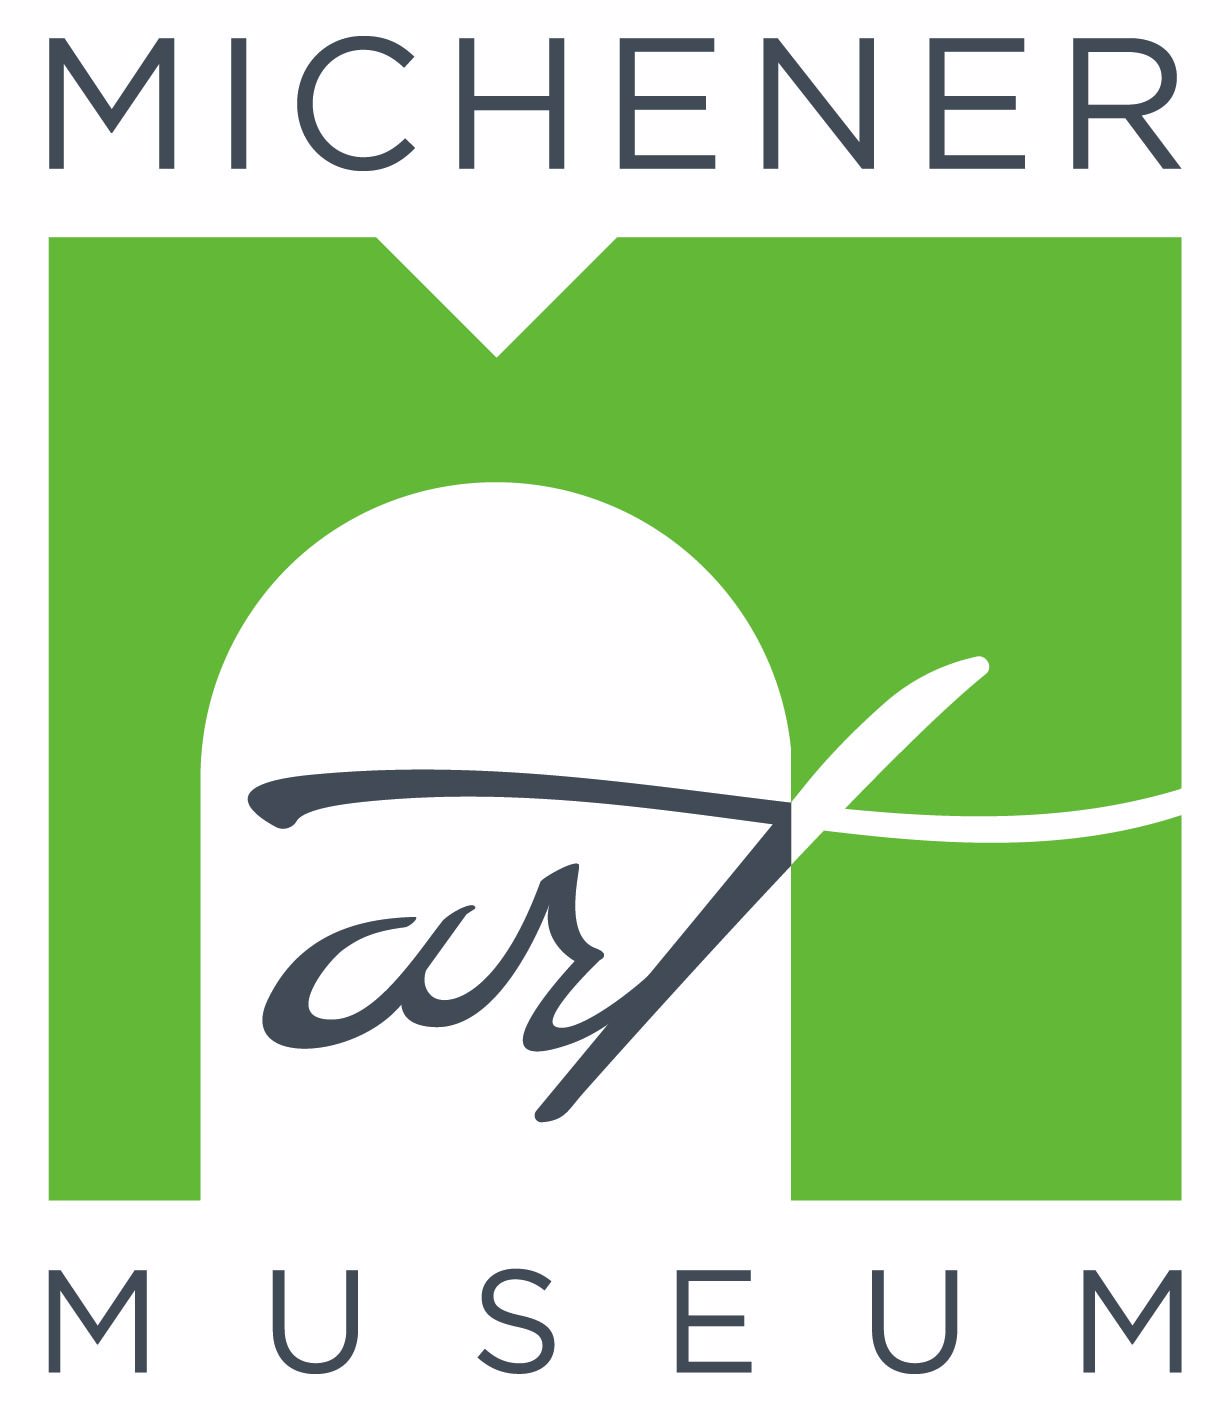 James A. Michener Art Museum logo